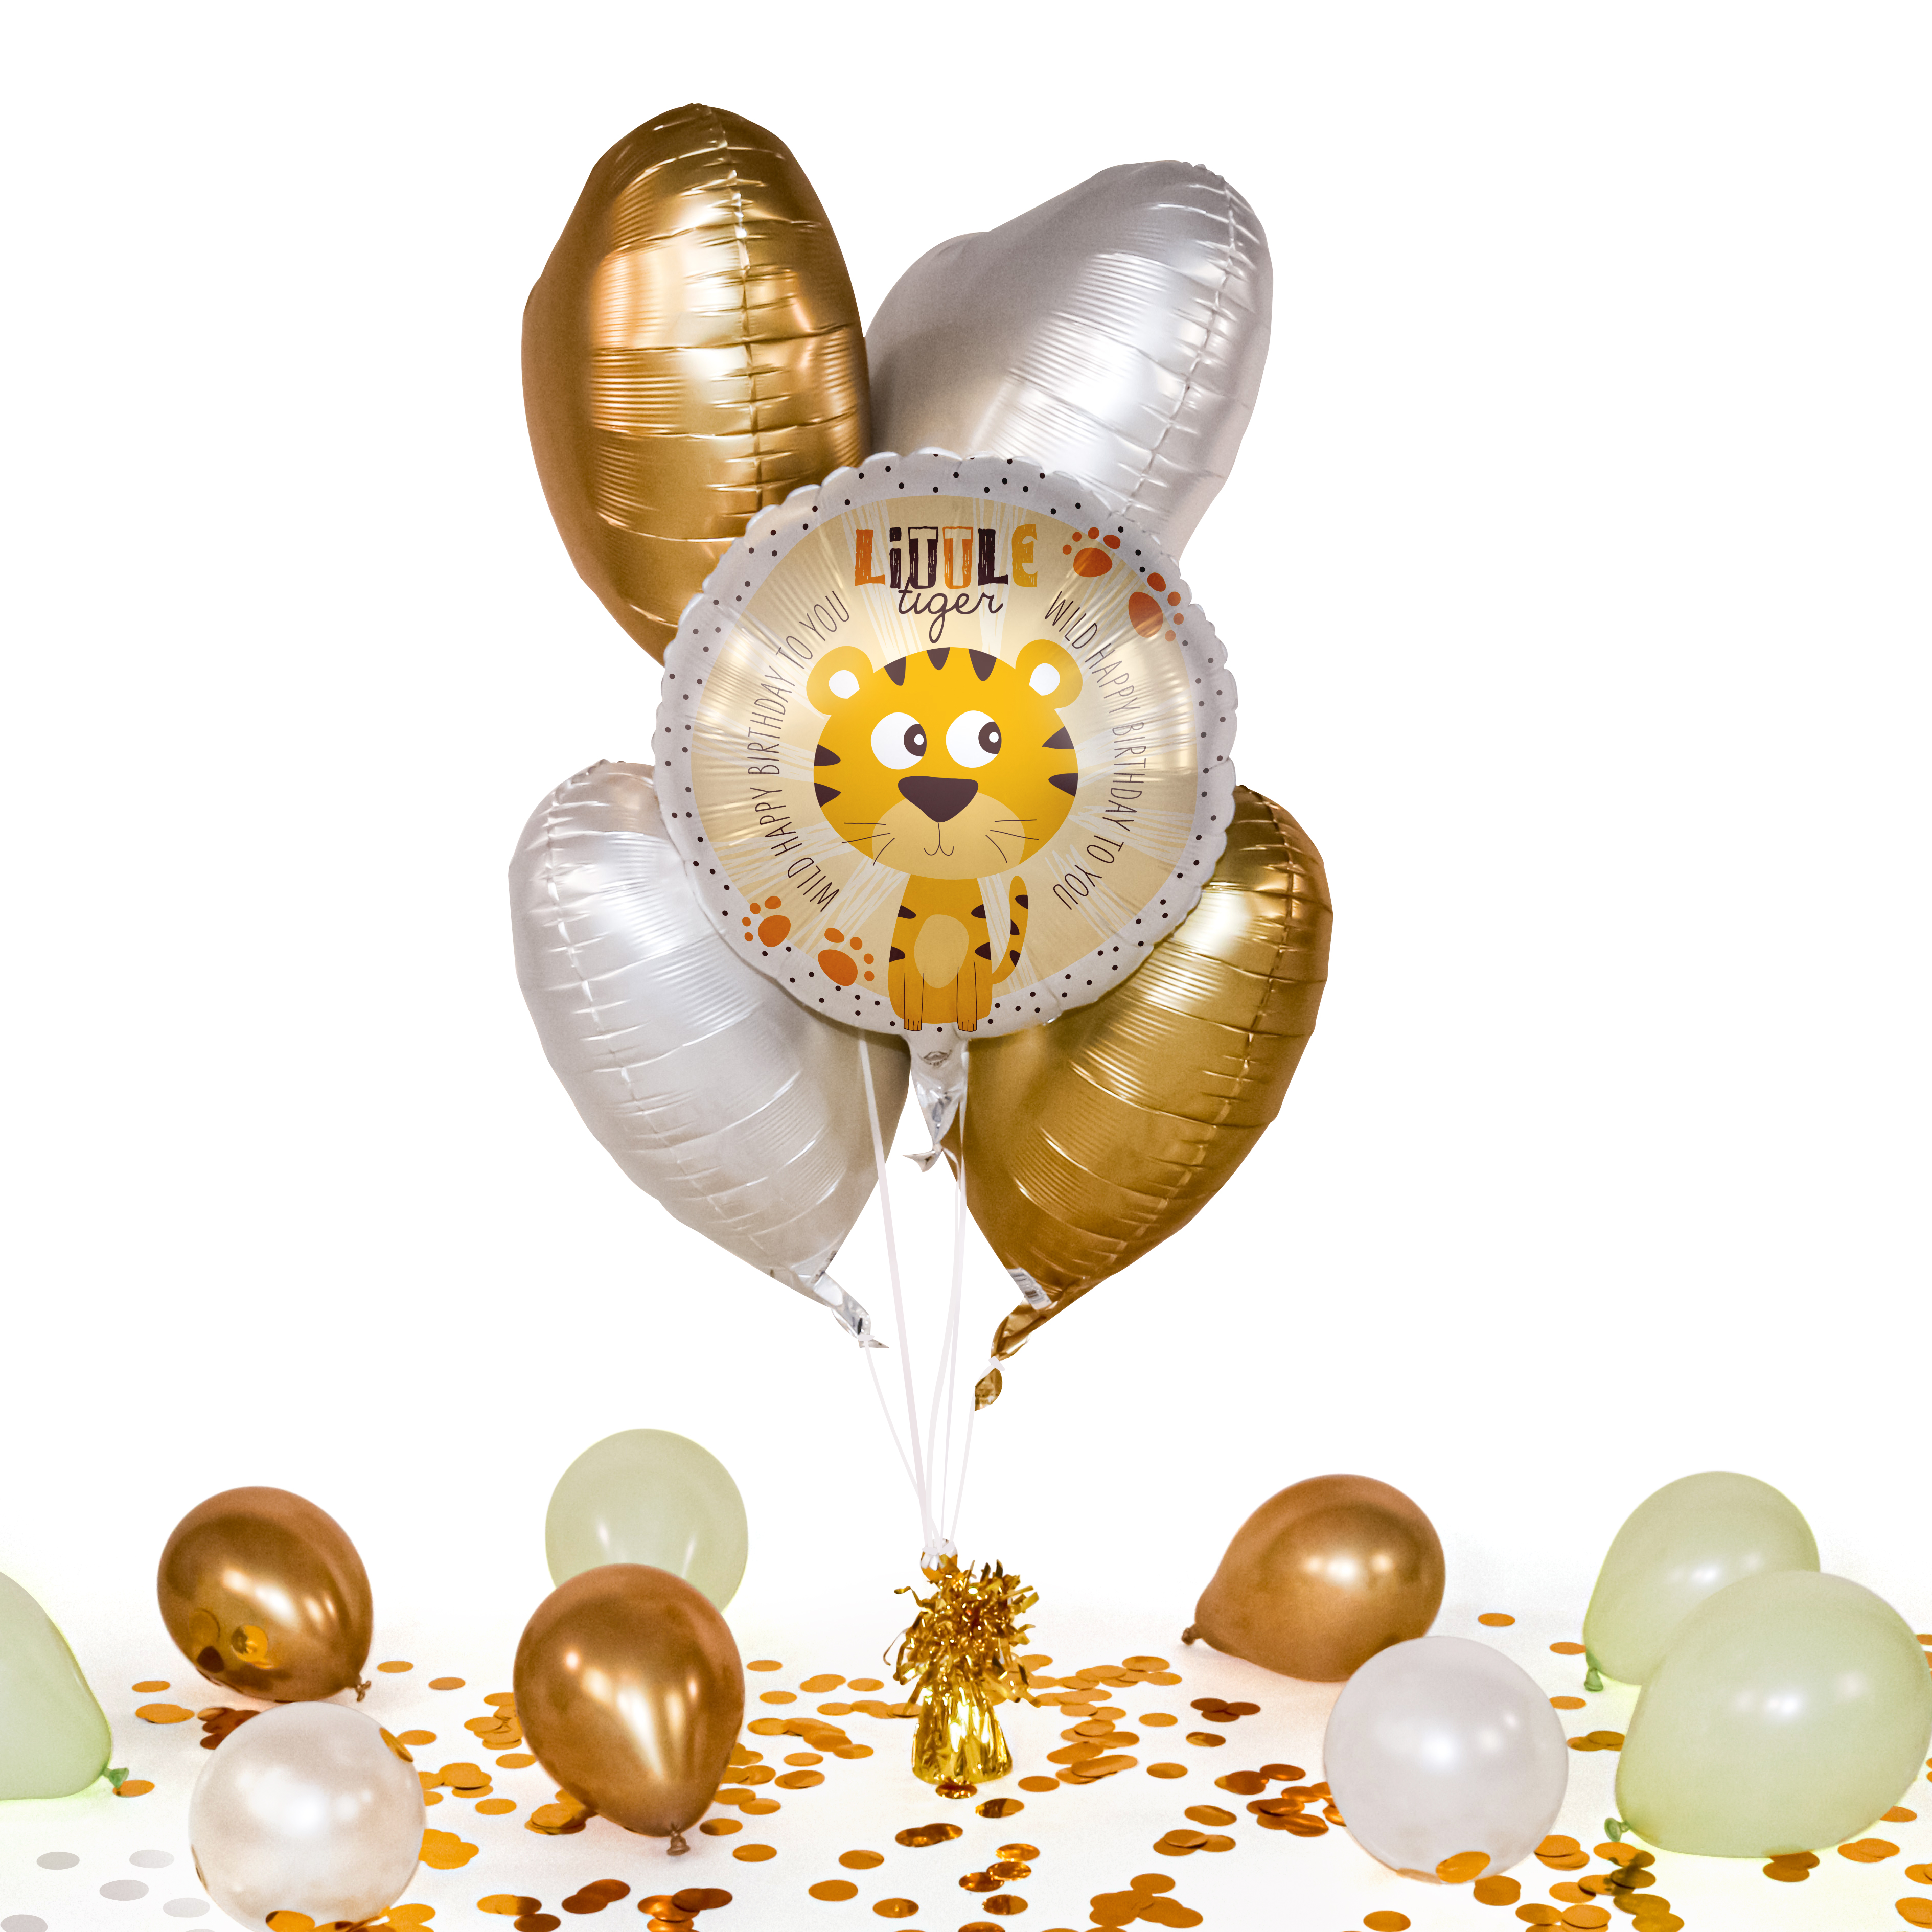 Heliumballon in a Box - Little Tiger Birthday